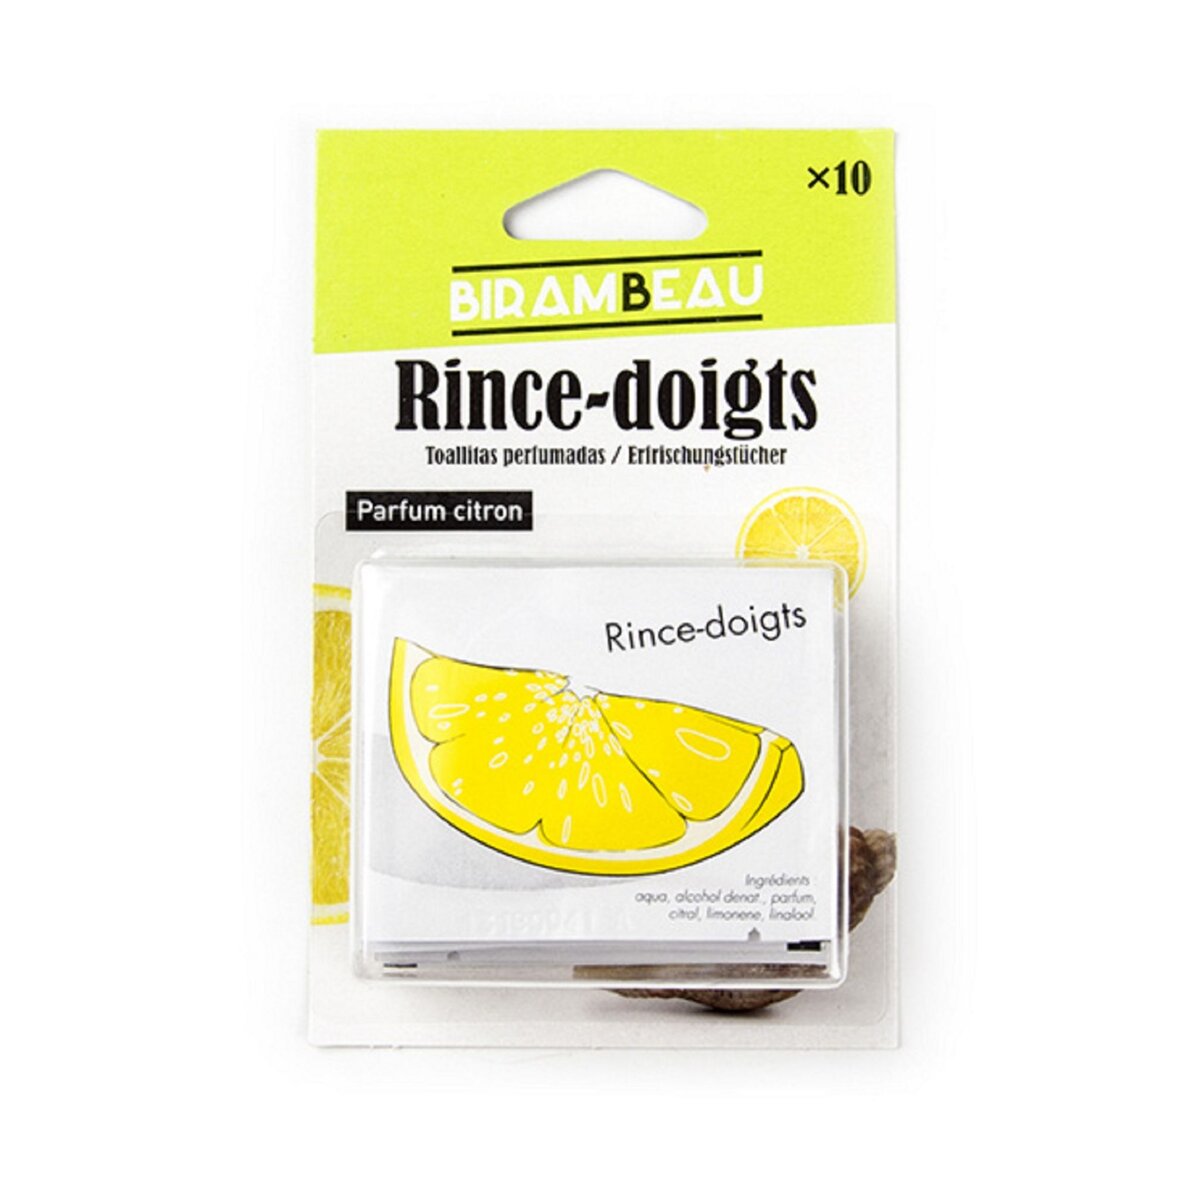 	Rince-doigts parfum citron 